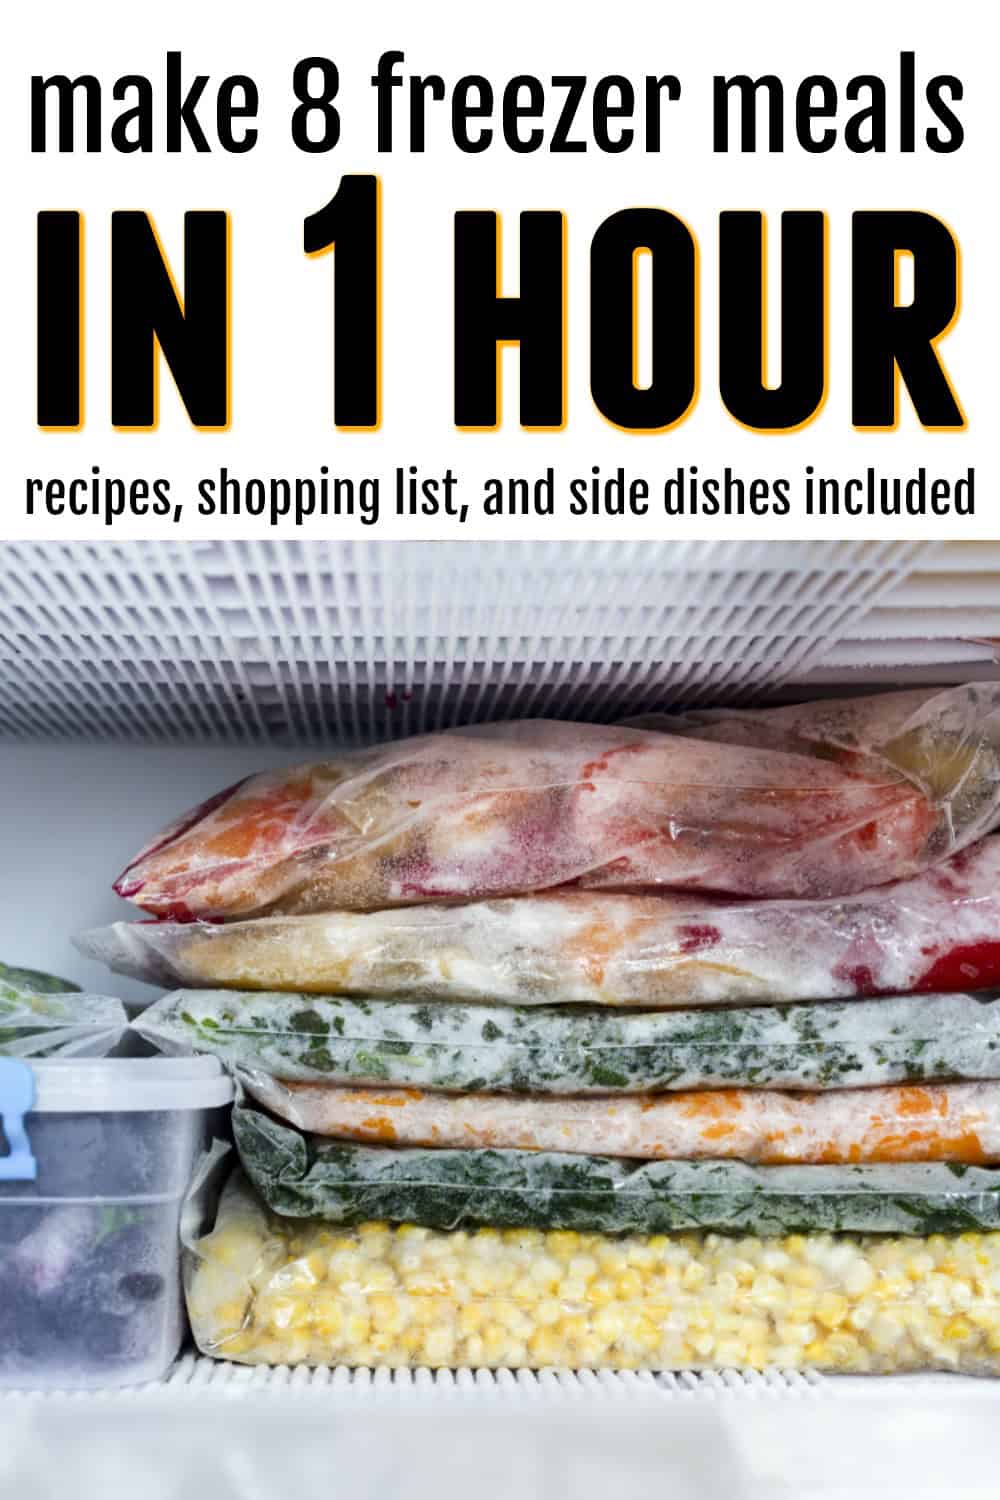 https://www.sixsistersstuff.com/wp-content/uploads/2012/09/Make-8-freezer-meals-in-1-hour-on-SixSistersStuff-1.jpg